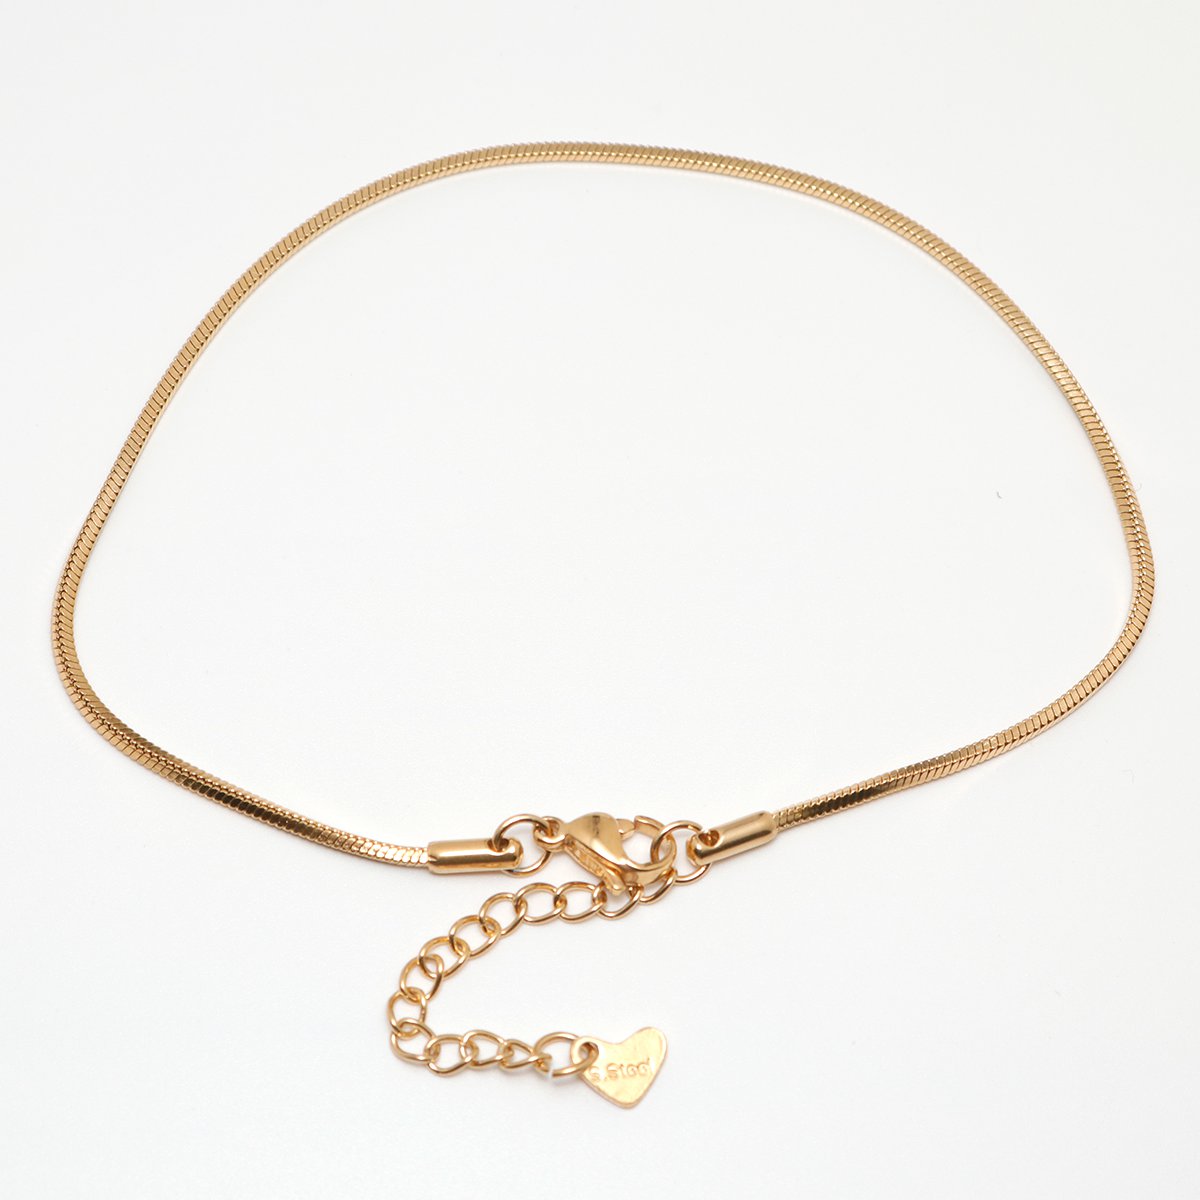 23.3cm Stainless Steel Jewelry Snake Chain Anklet Bracelet for Women